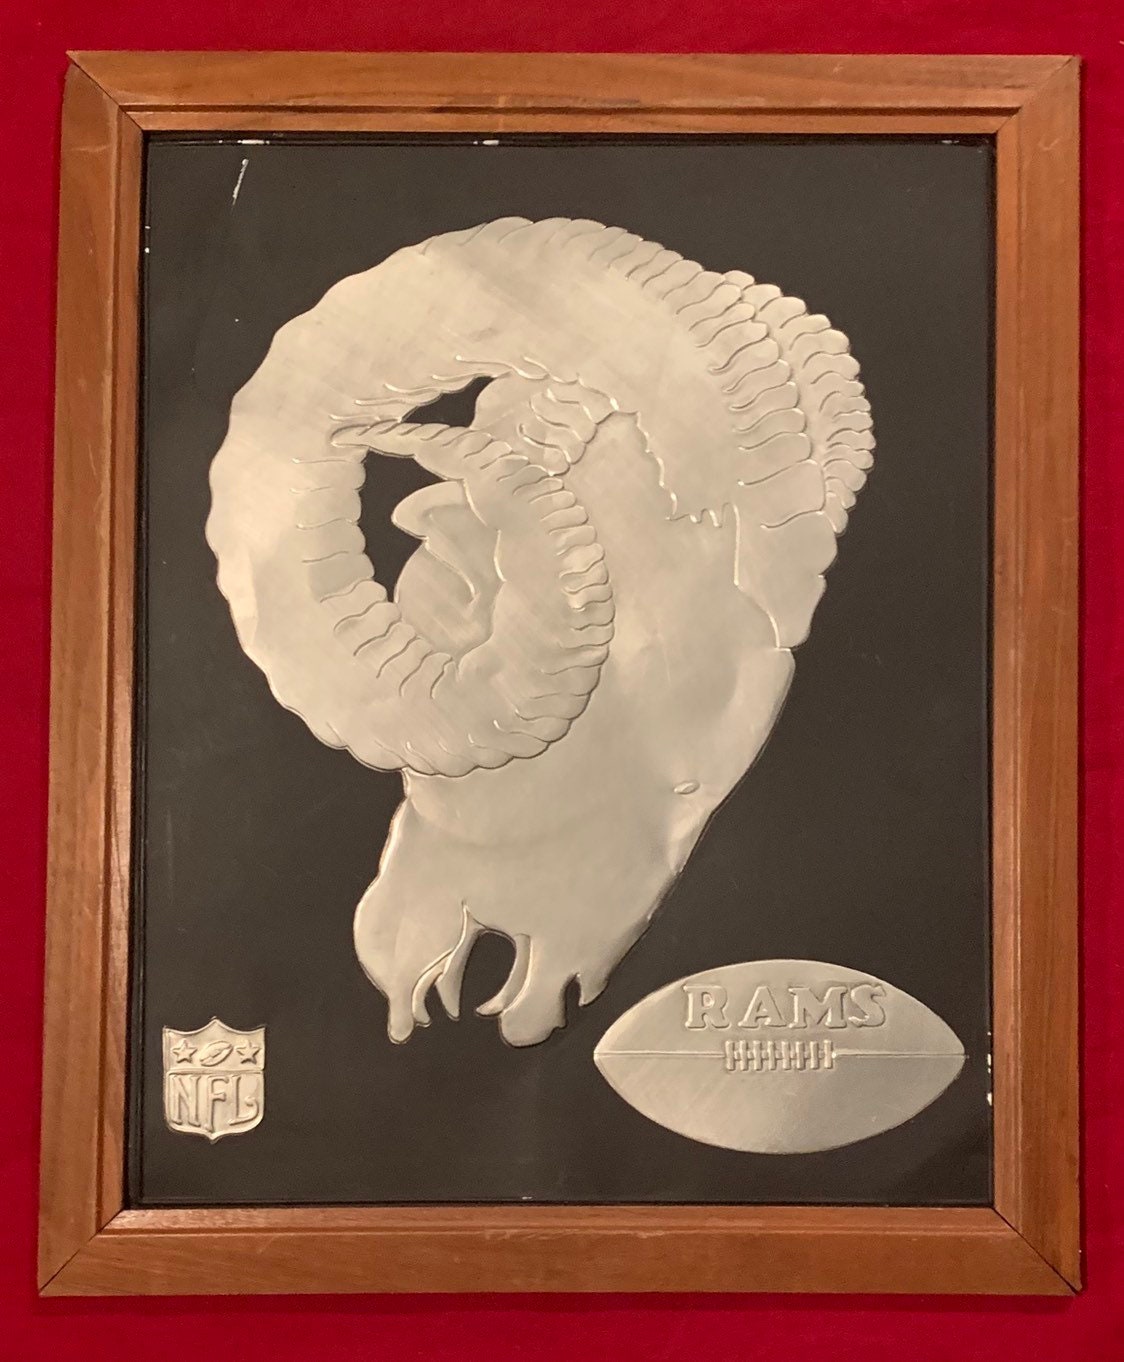 Vintage Los Angeles Rams Nfl Football Team Mascot Aluminum Metal Wall Plaque in Original Frame By Acrometal - Old Memorabilia